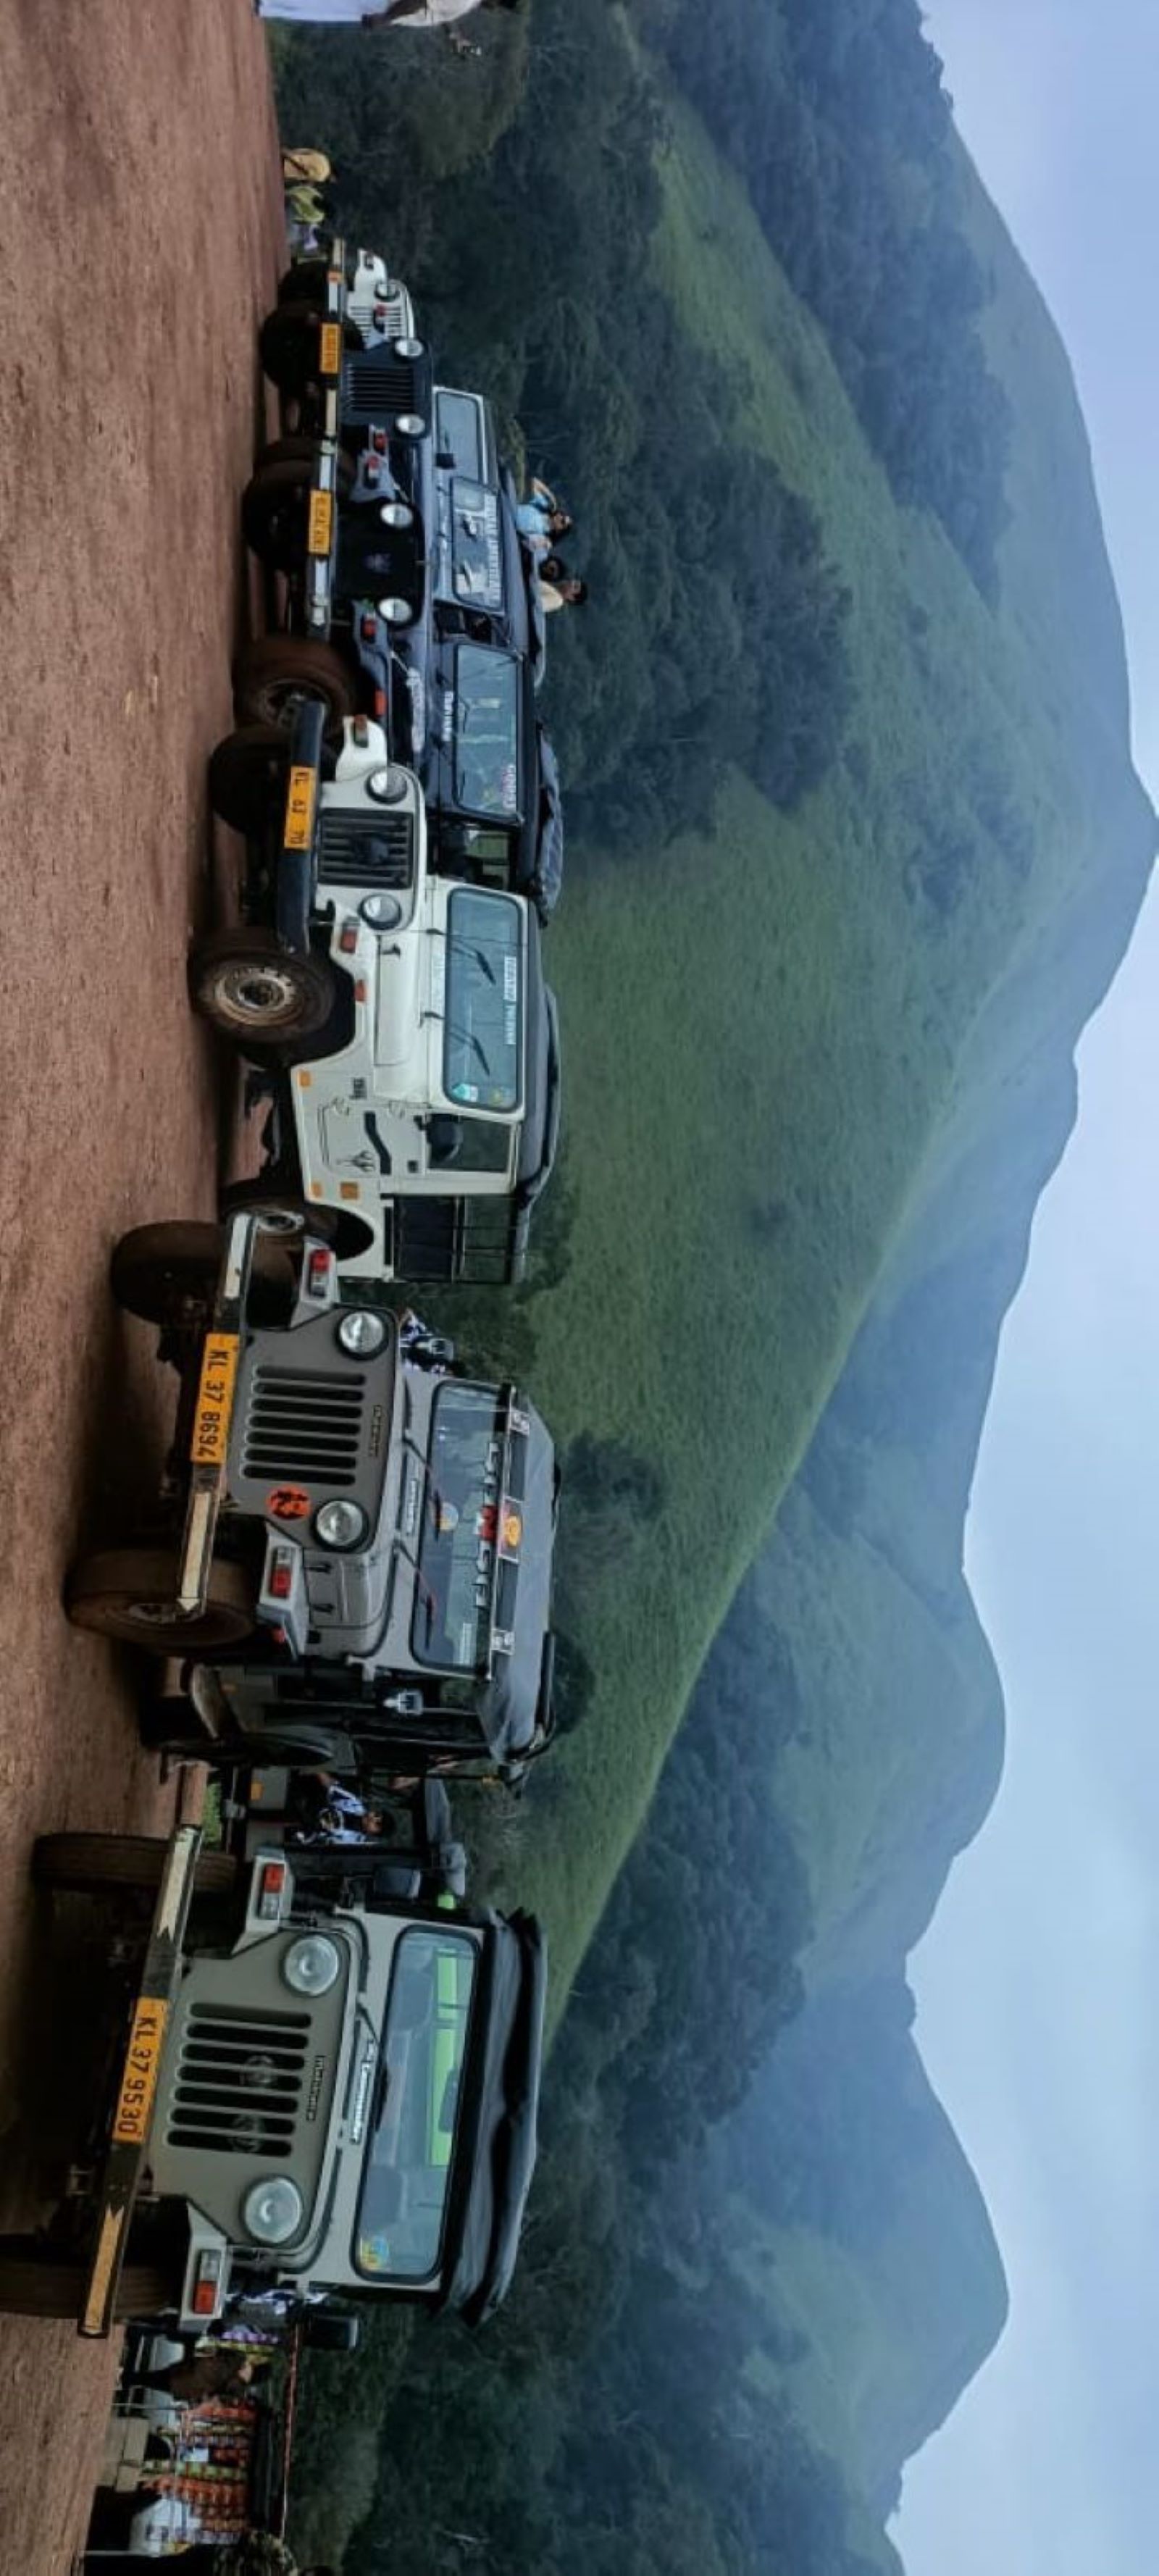 green munnar jeep safari services